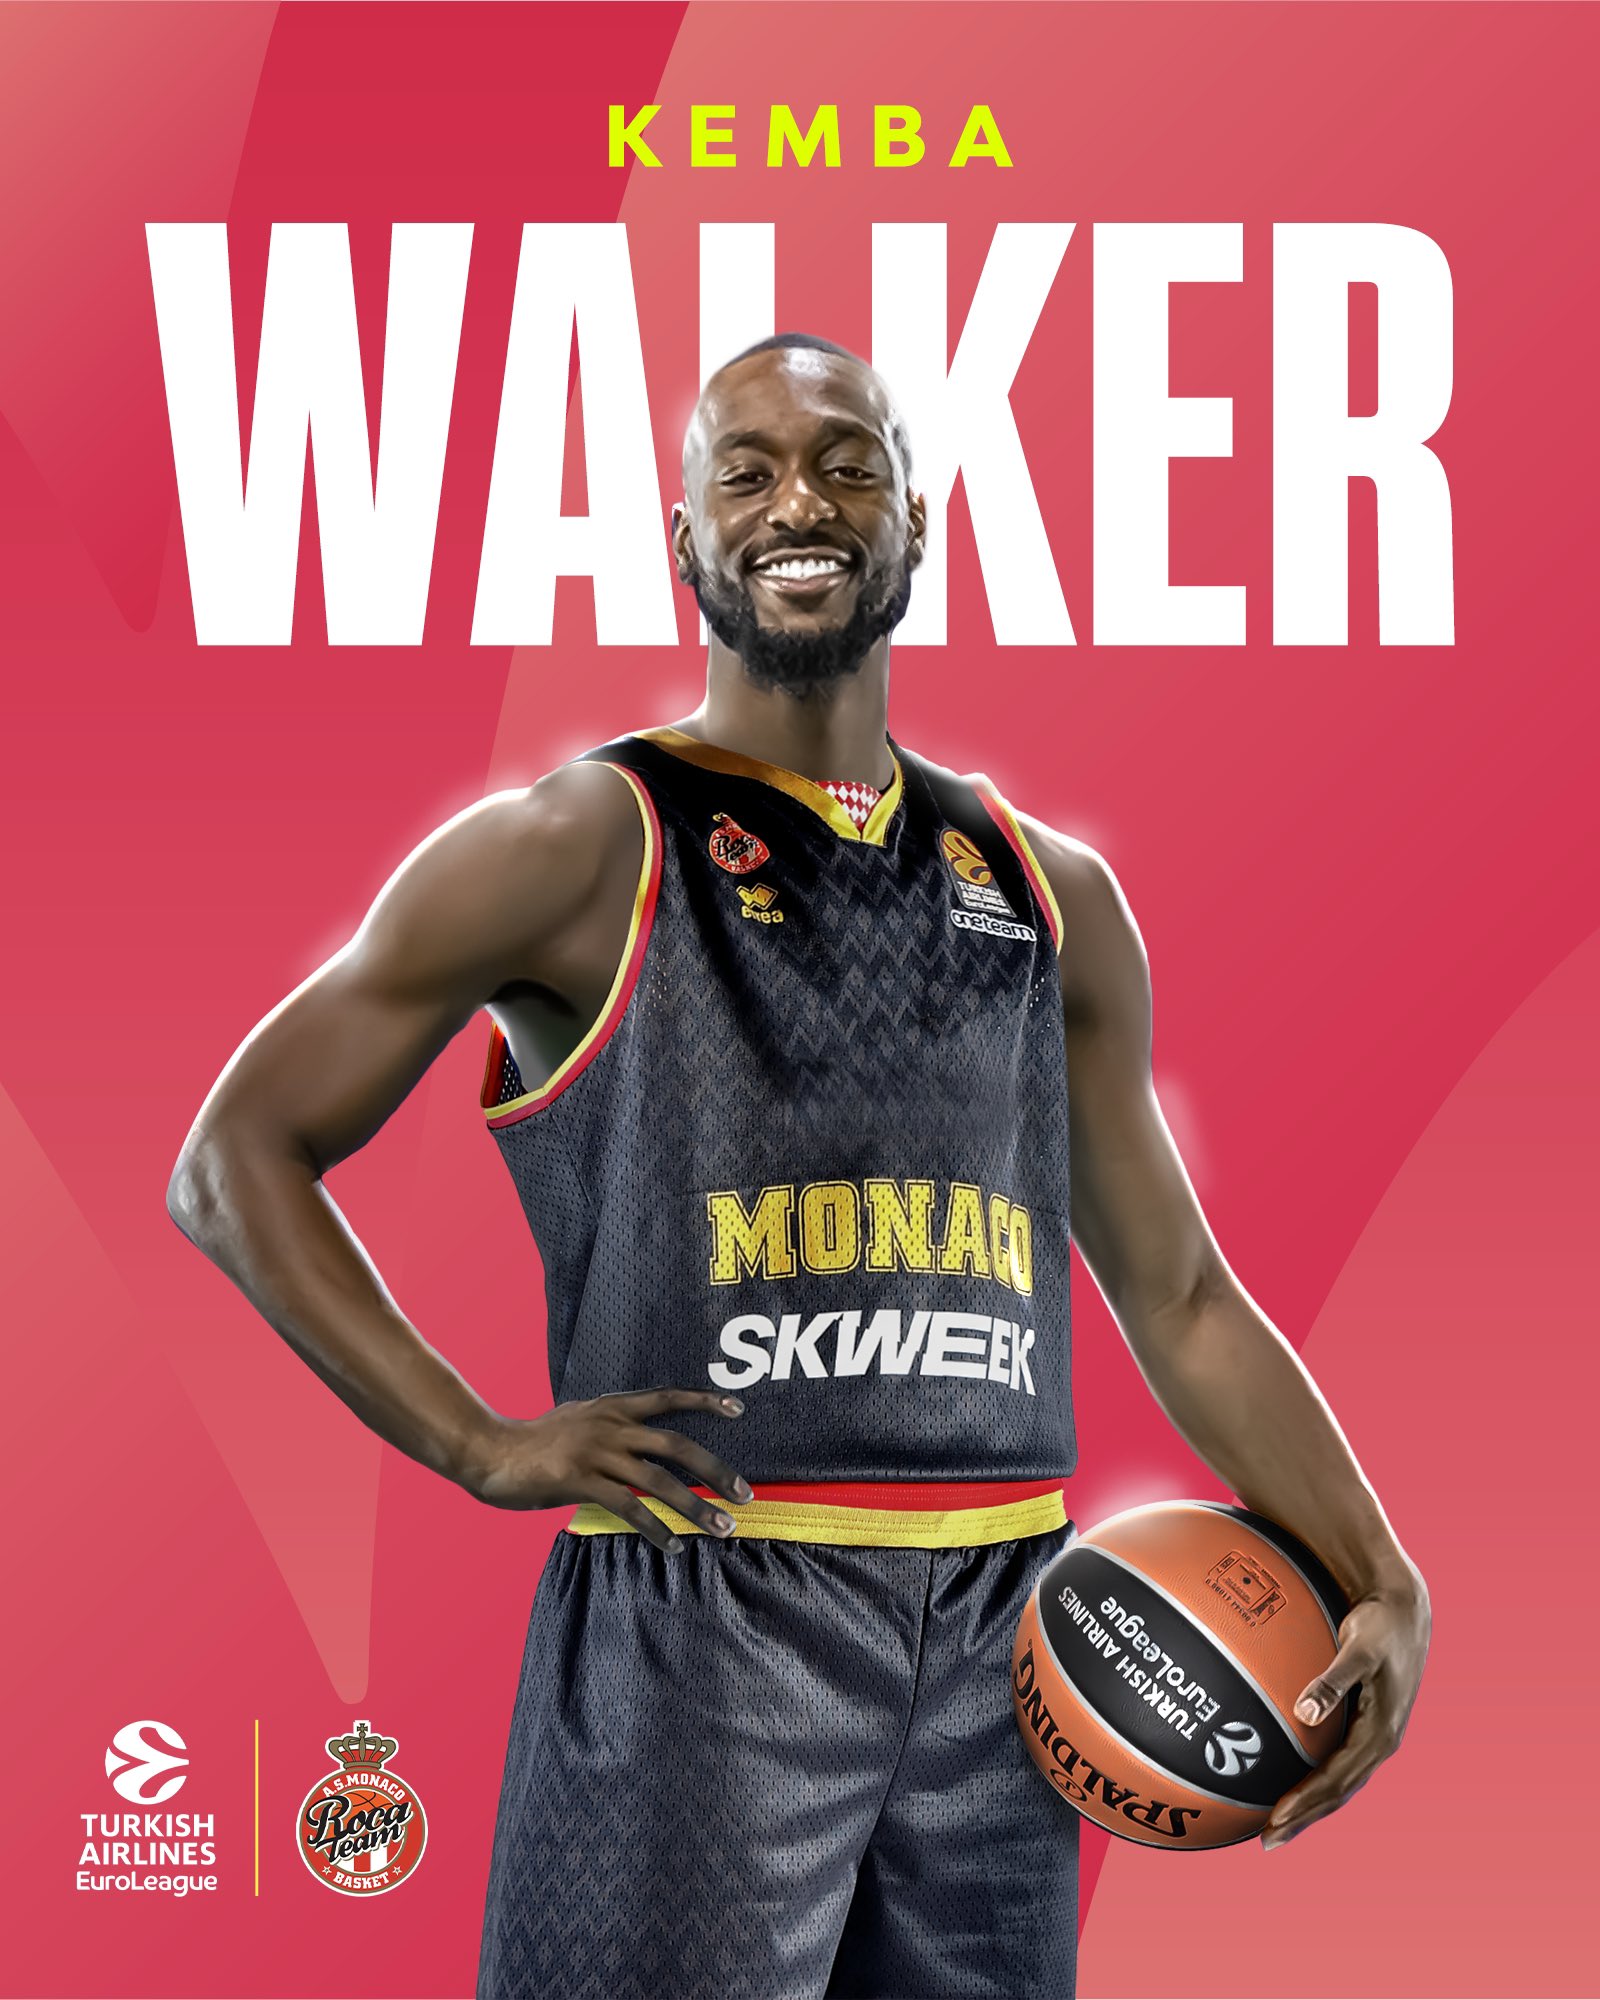 Former NBA Player Kemba Walker